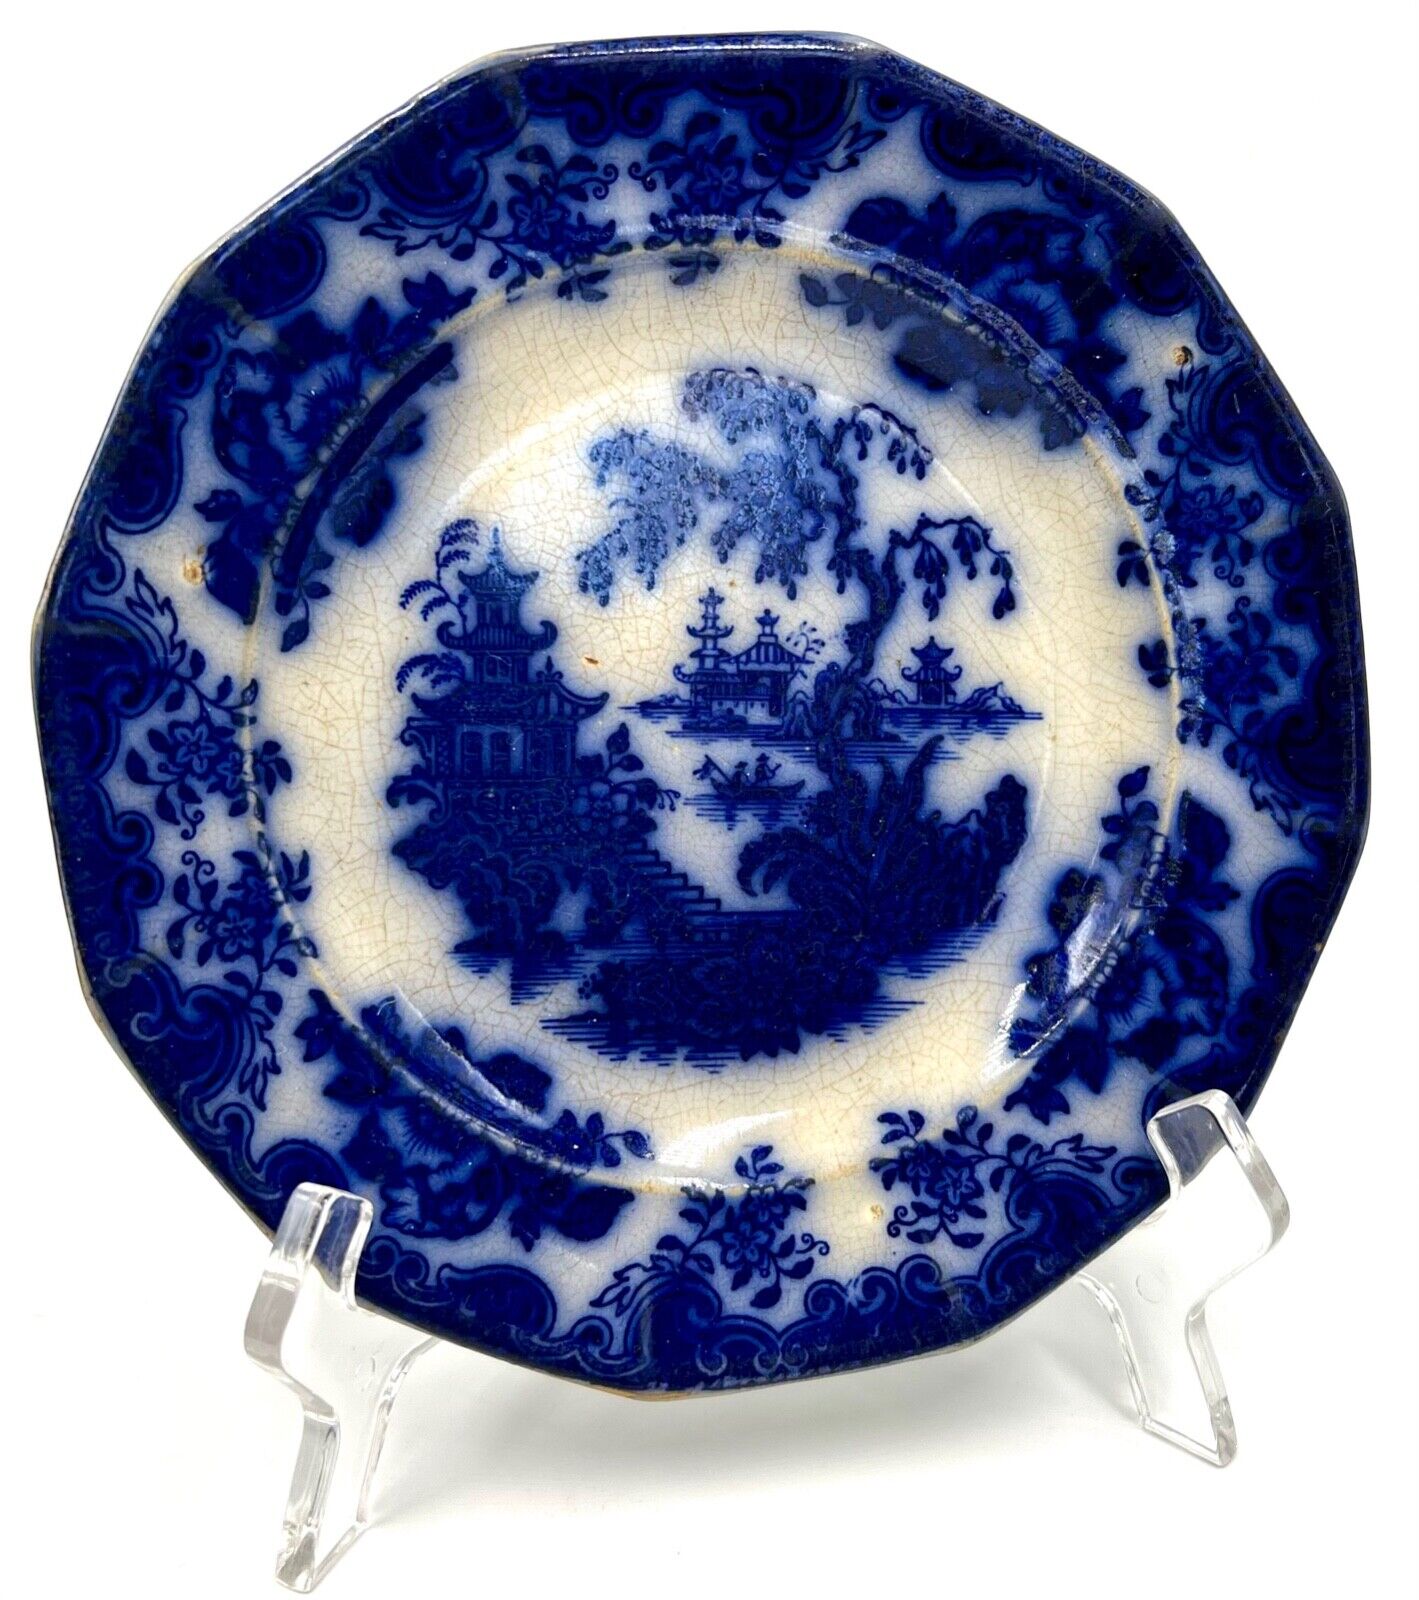 ANTIQUE BLUE FLOW TRANSFERWARE PLATE, SHANGHAE, JF & CO, JACOB FURNIVALS, c1840